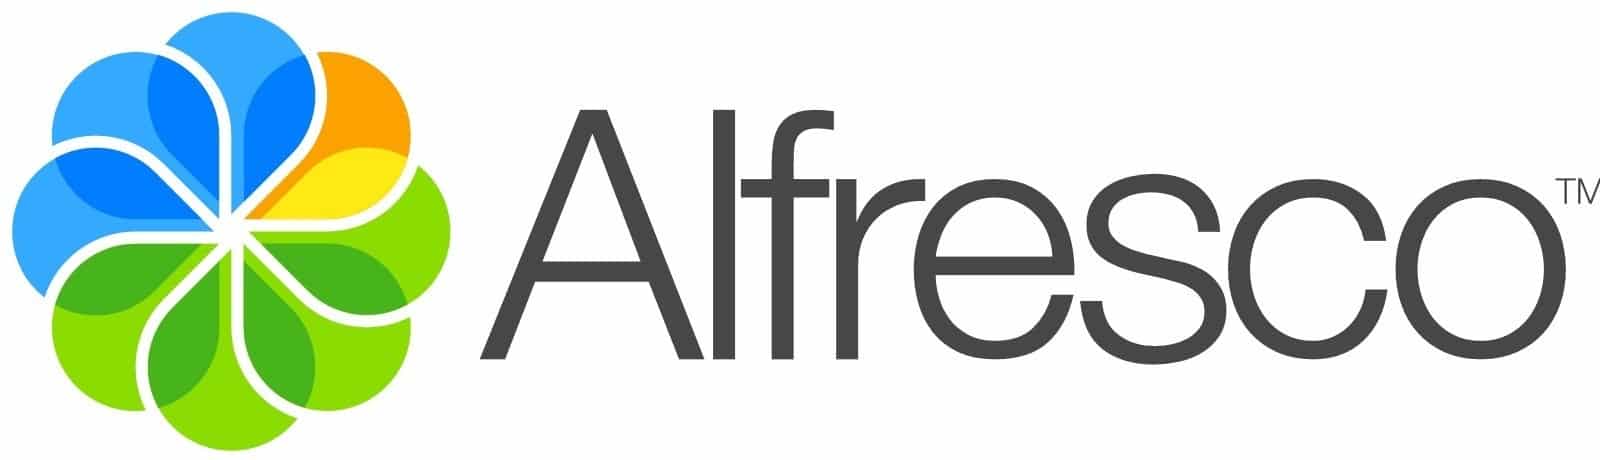 alfresco_cms_logo